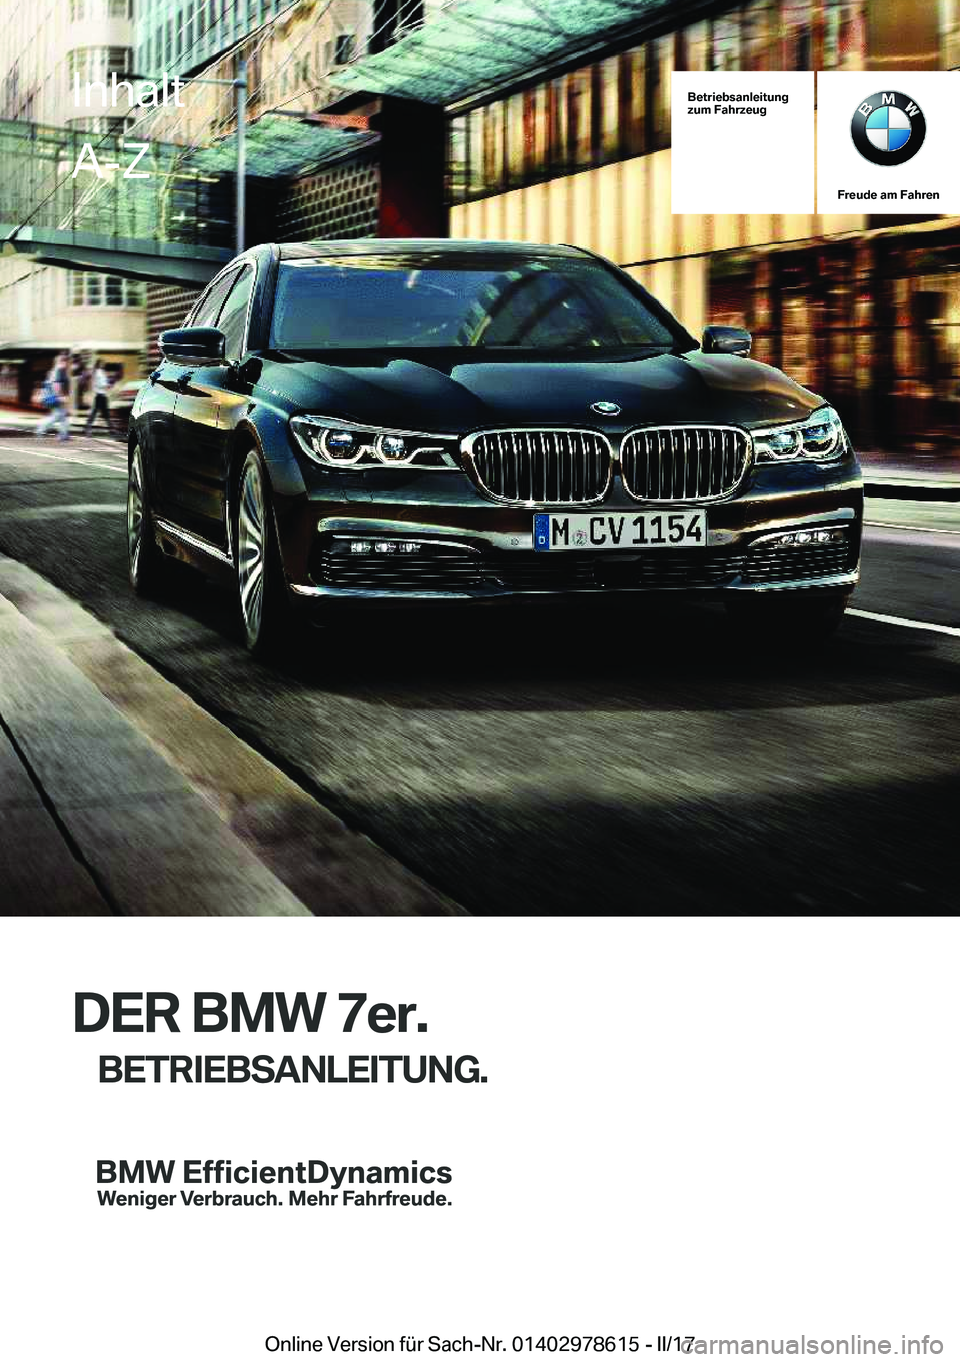 BMW 7 SERIES 2018  Betriebsanleitungen (in German) �B�e�t�r�i�e�b�s�a�n�l�e�i�t�u�n�g
�z�u�m��F�a�h�r�z�e�u�g
�F�r�e�u�d�e��a�m��F�a�h�r�e�n
�D�E�R��B�M�W��7�e�r�.
�B�E�T�R�I�E�B�S�A�N�L�E�I�T�U�N�G�.
�I�n�h�a�l�t�A�-�Z
�O�n�l�i�n�e� �V�e�r�s�i�o